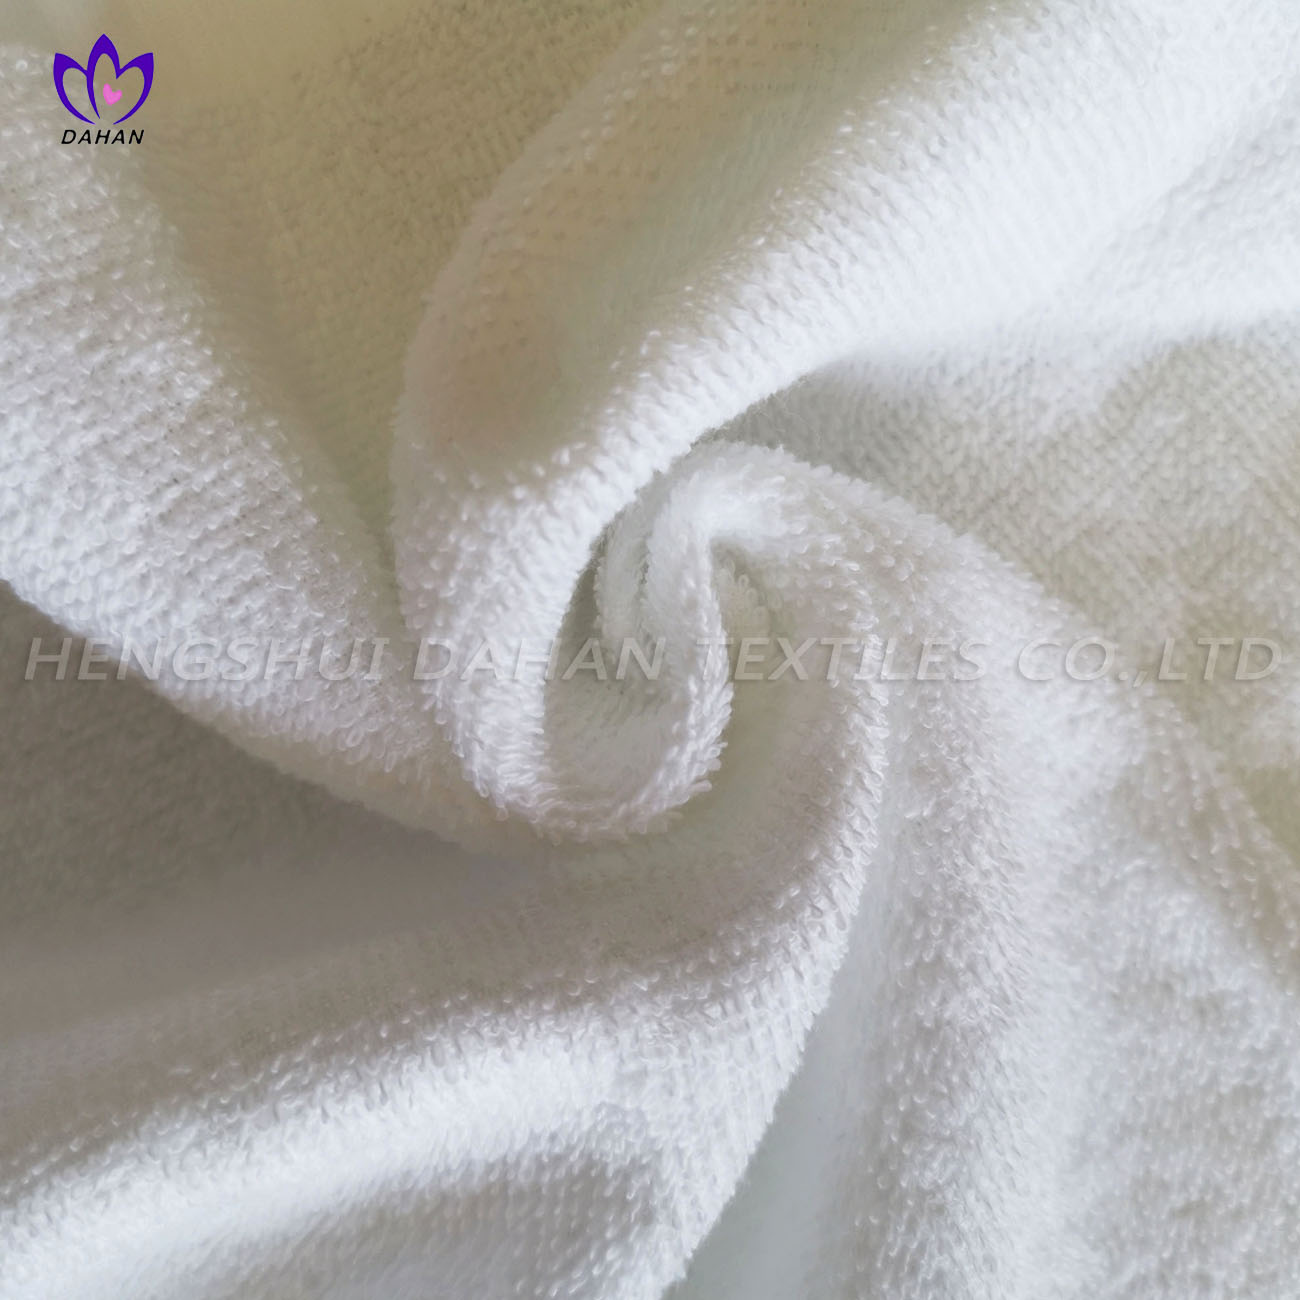 CT60 100% cotton solid color towels.